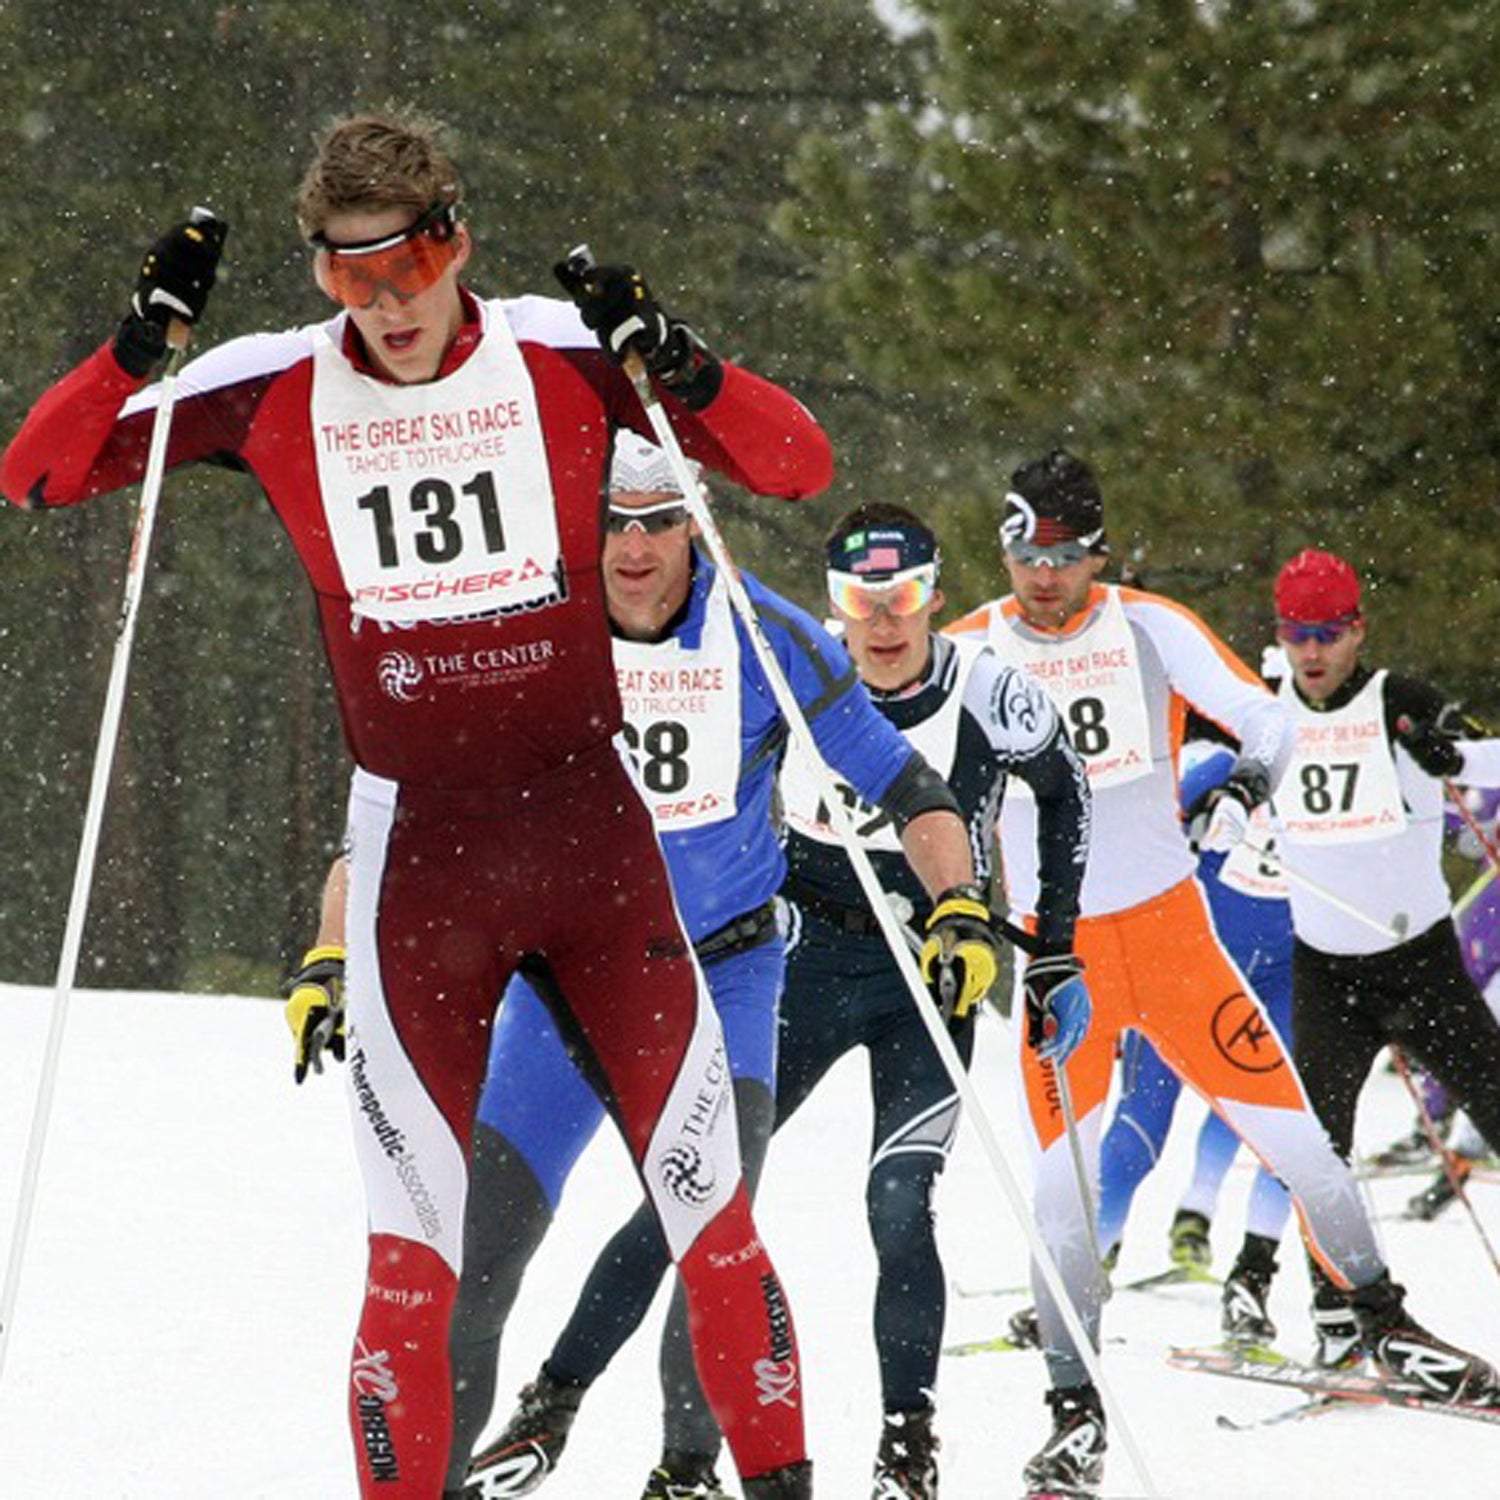 great ski race race report